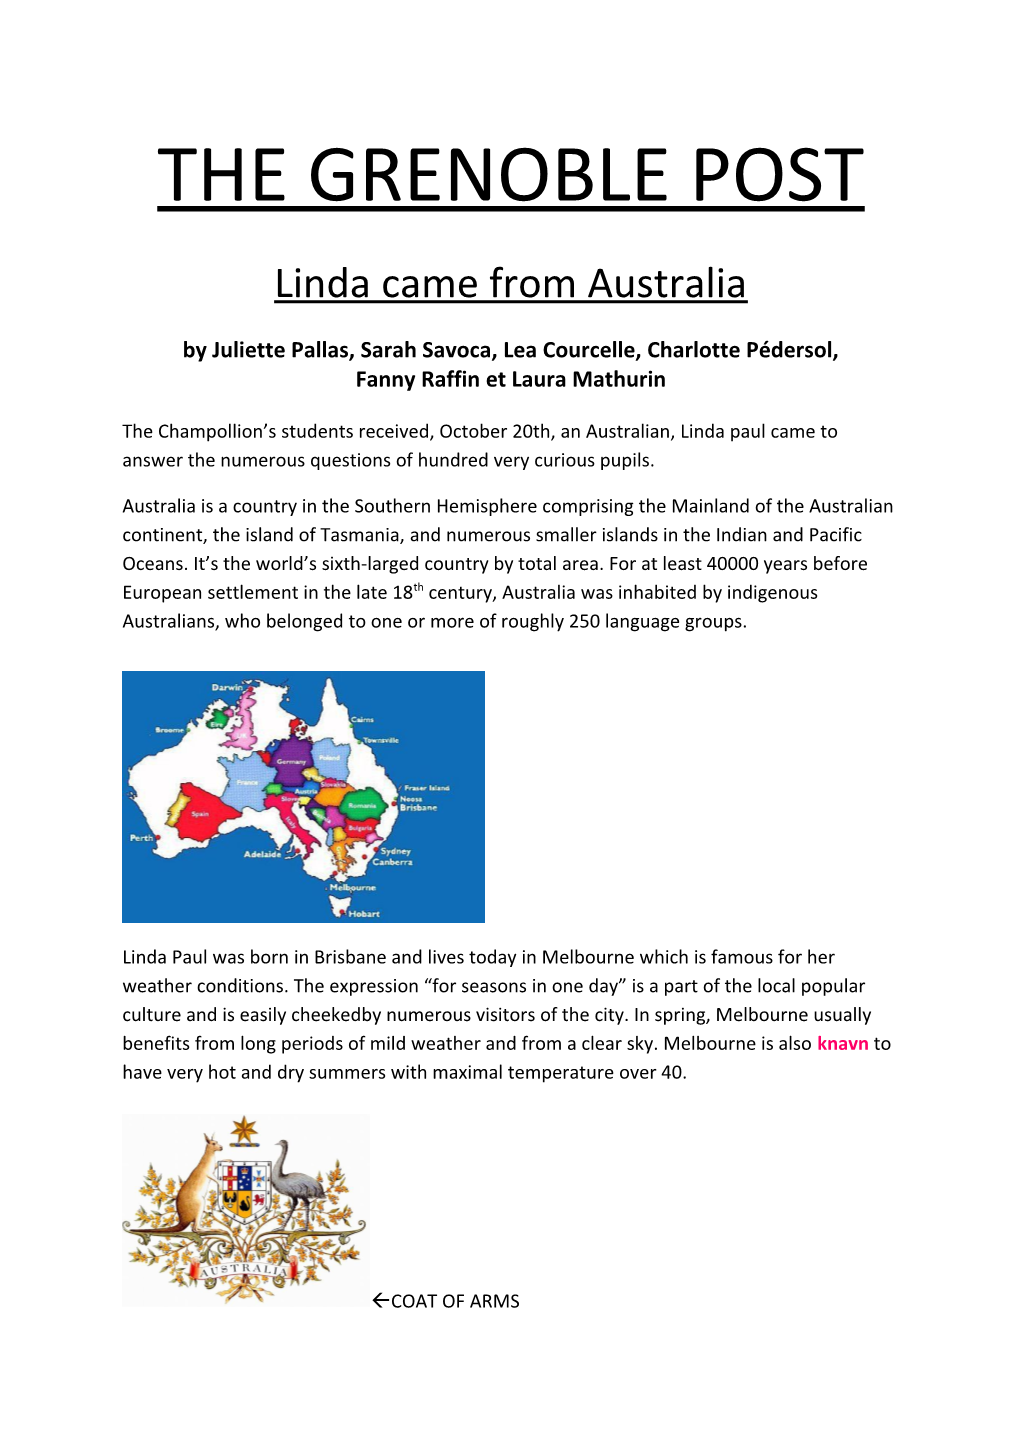 Linda Came from Australia